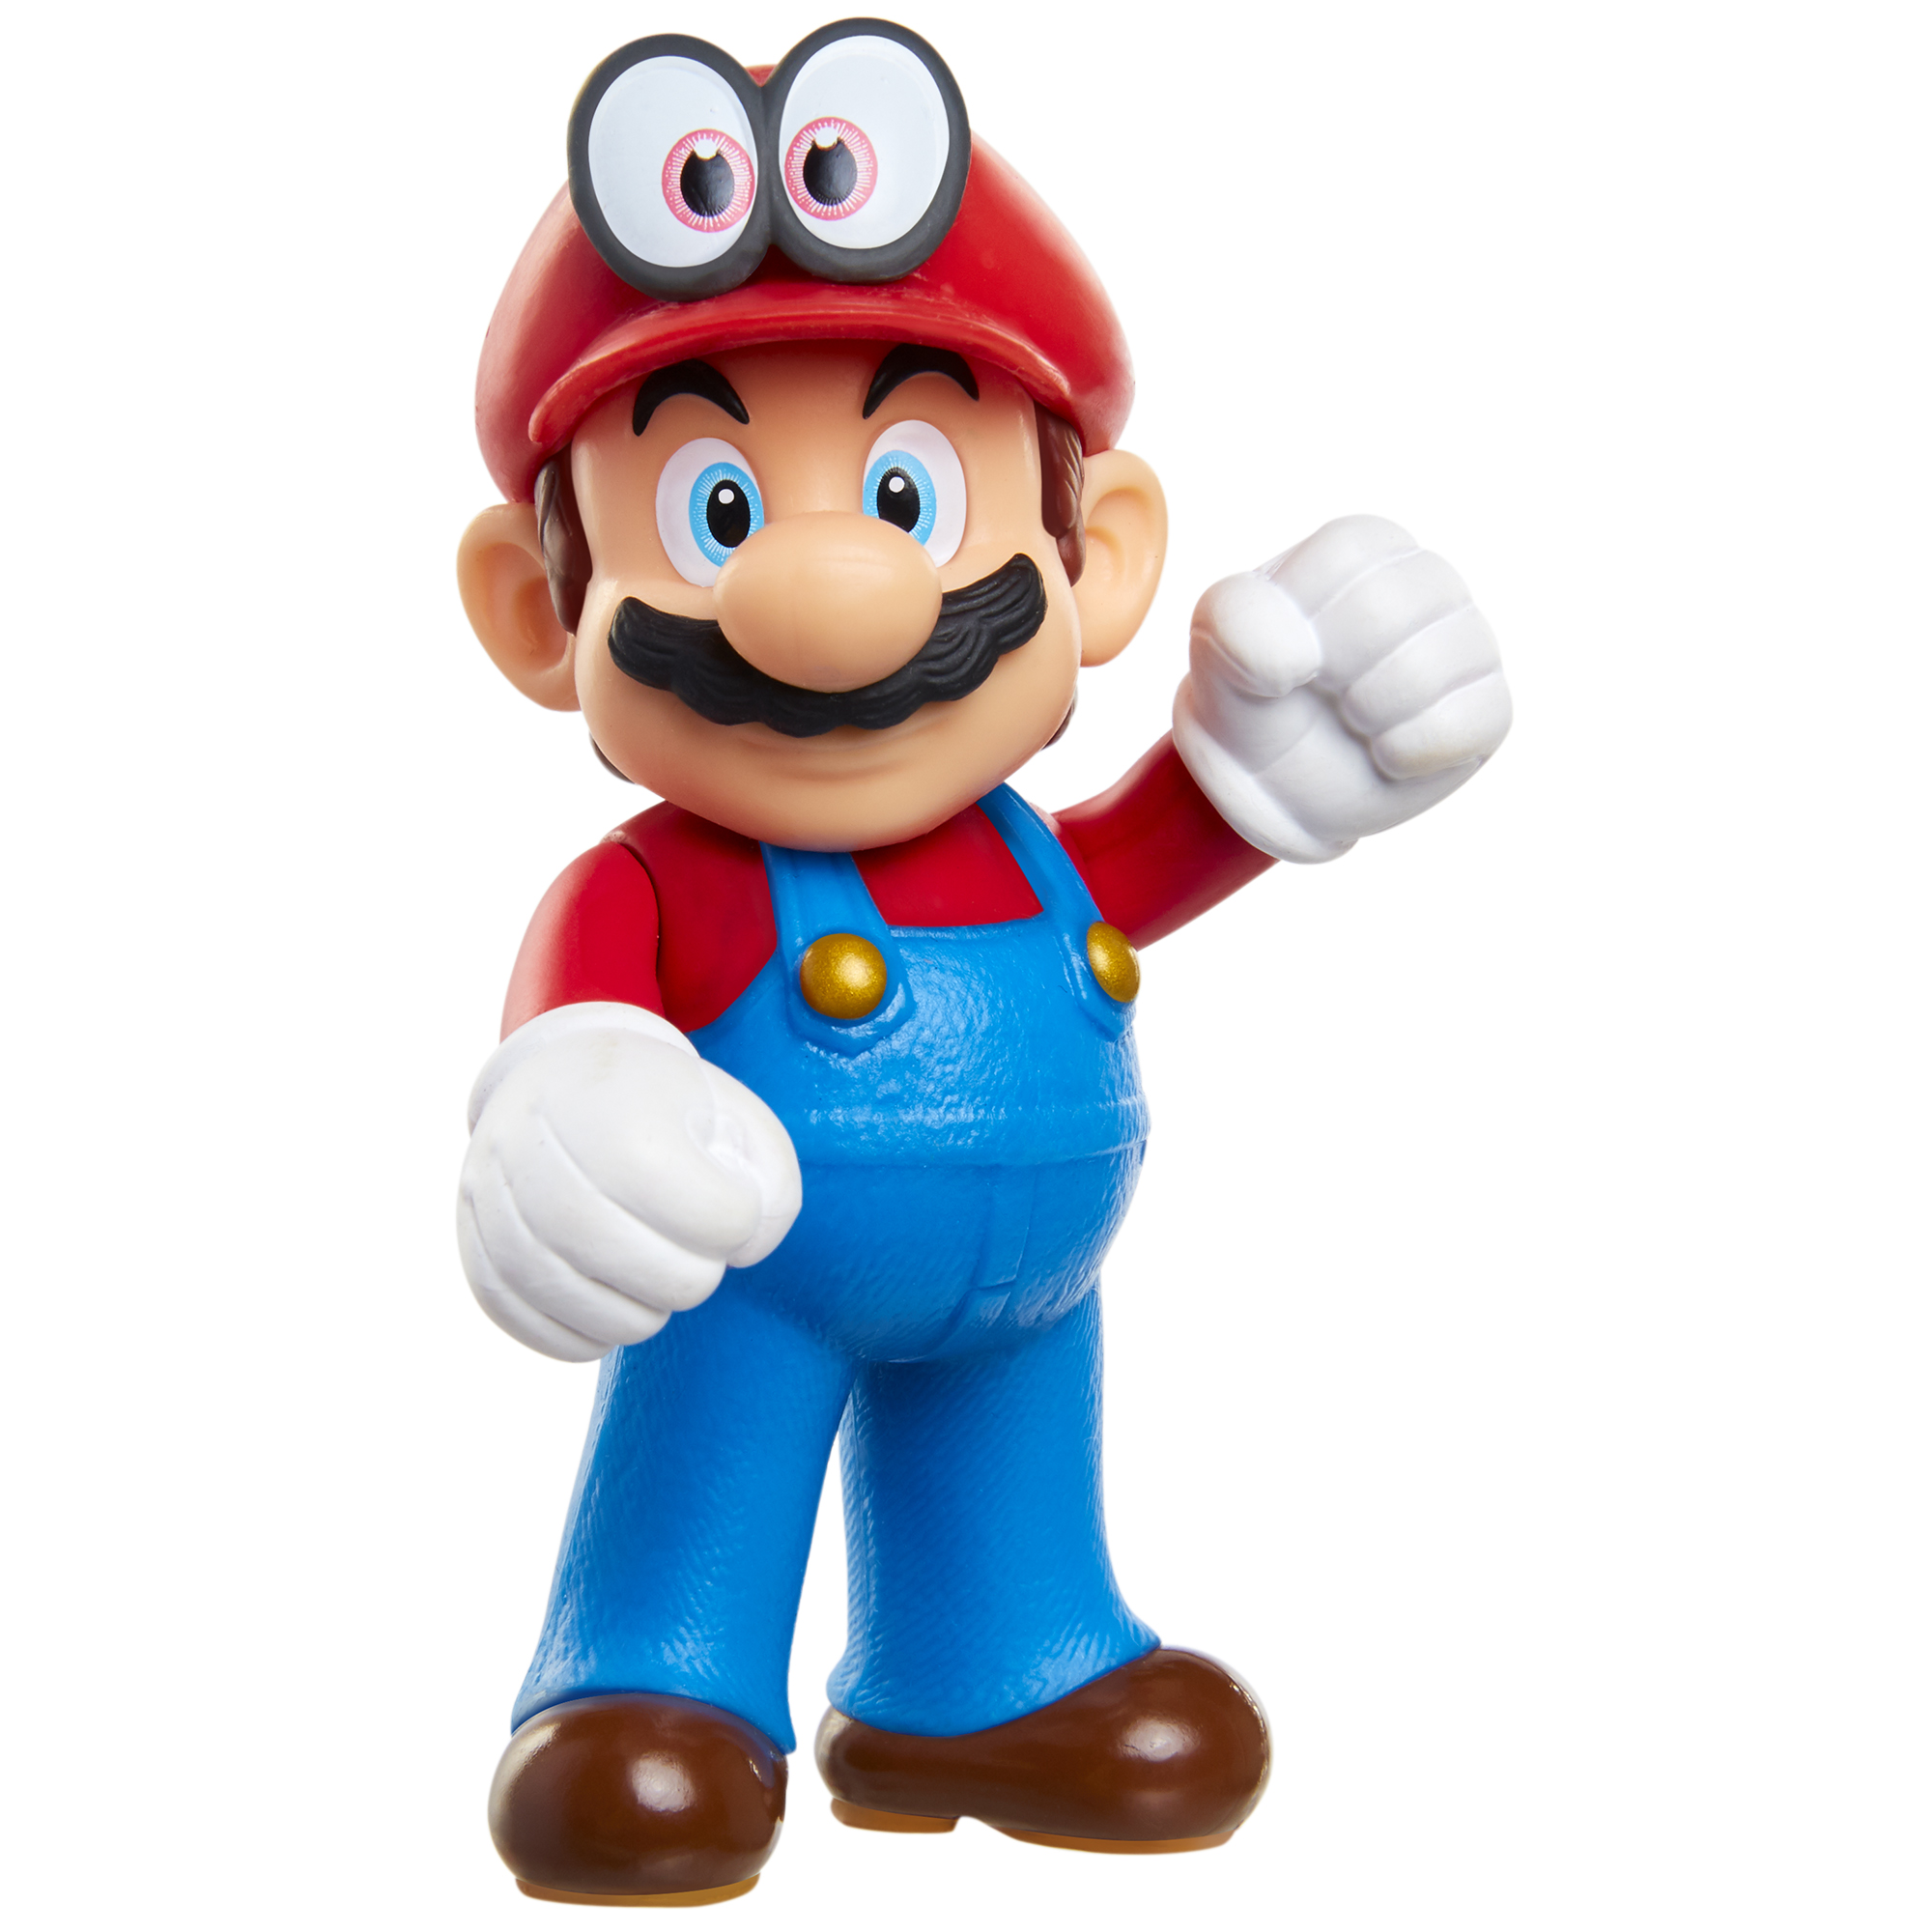 Super Mario Articulated Action Figure 2.5″ Standing Mario Odyssey